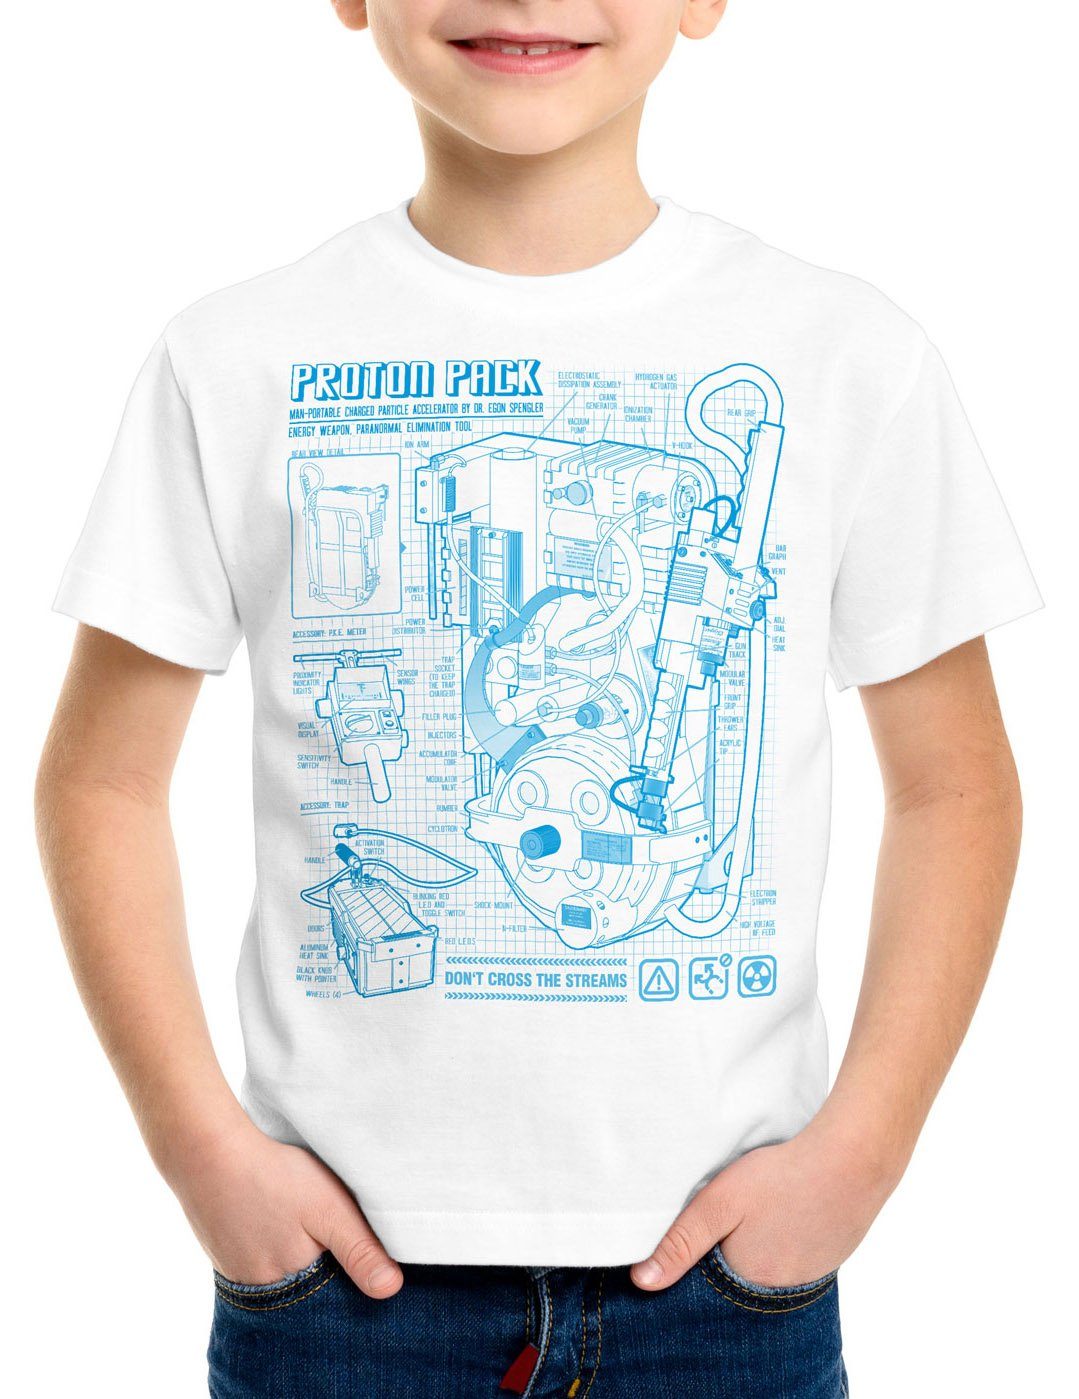 style3 Print-Shirt Kinder T-Shirt Geisterjäger Protonenstrahler Blaupause proton pack weiß